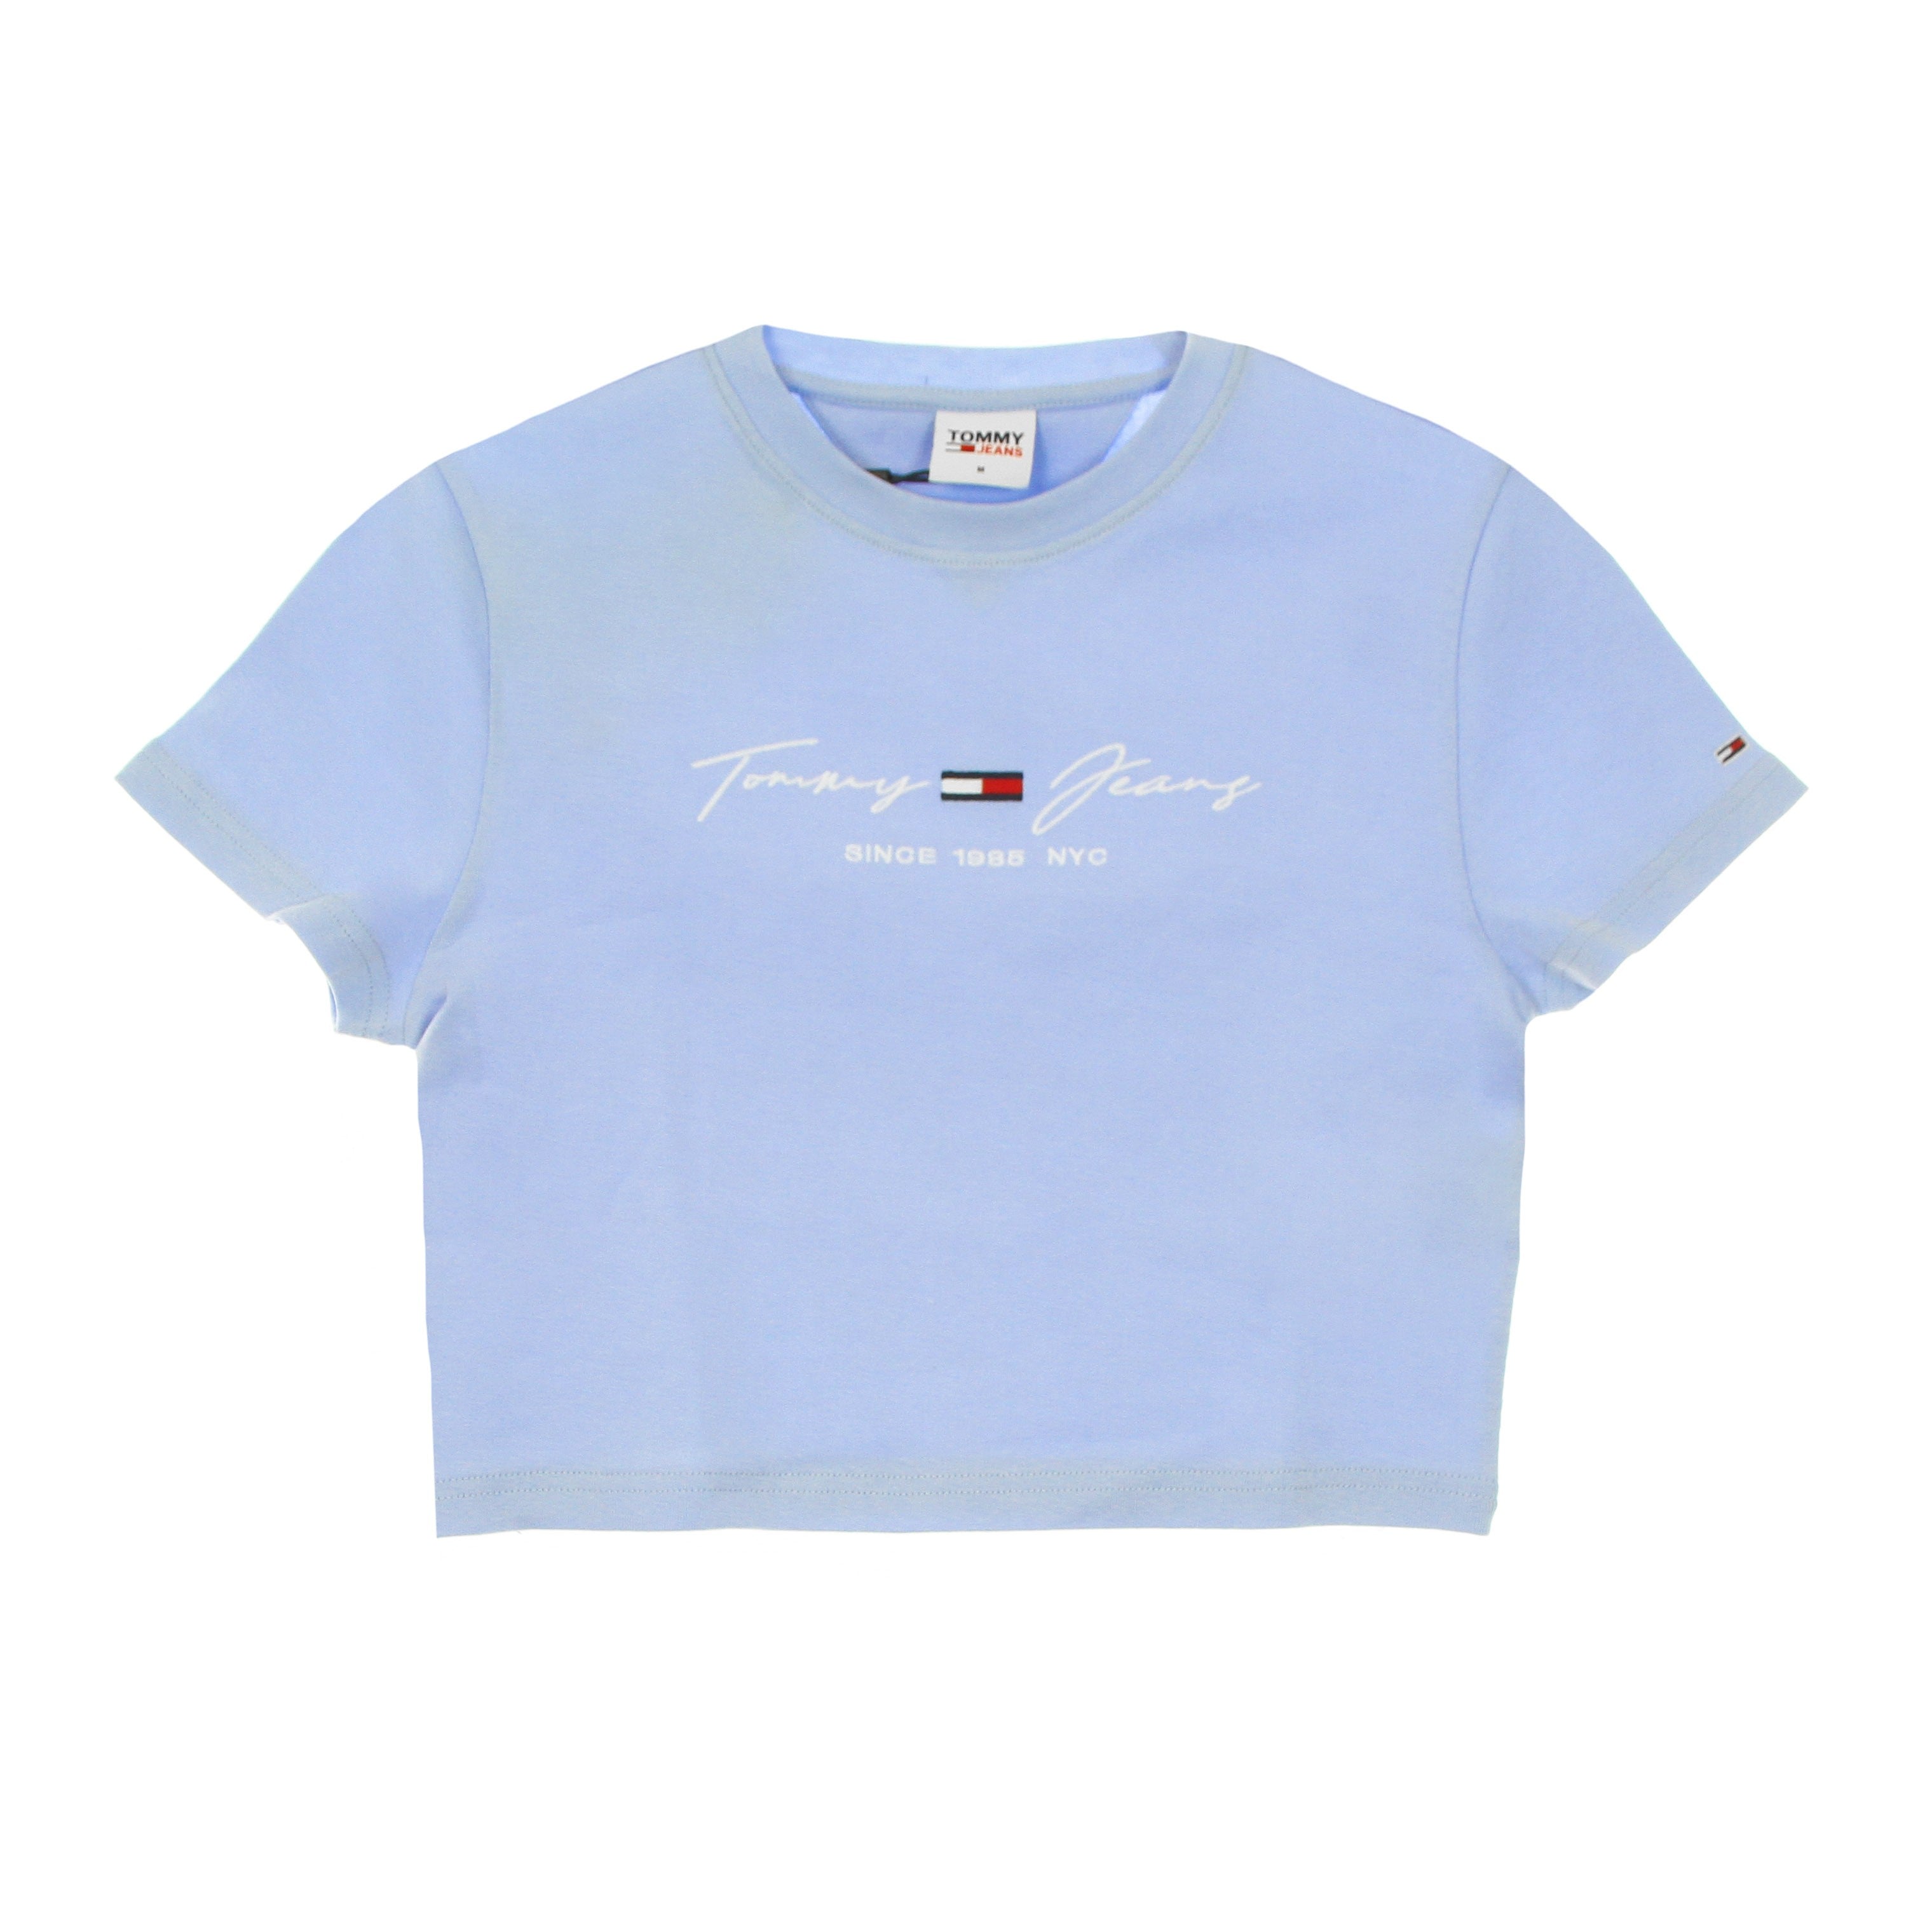 Rib Baby Tee Women's Cropped T-Shirt Light Powdery Blue